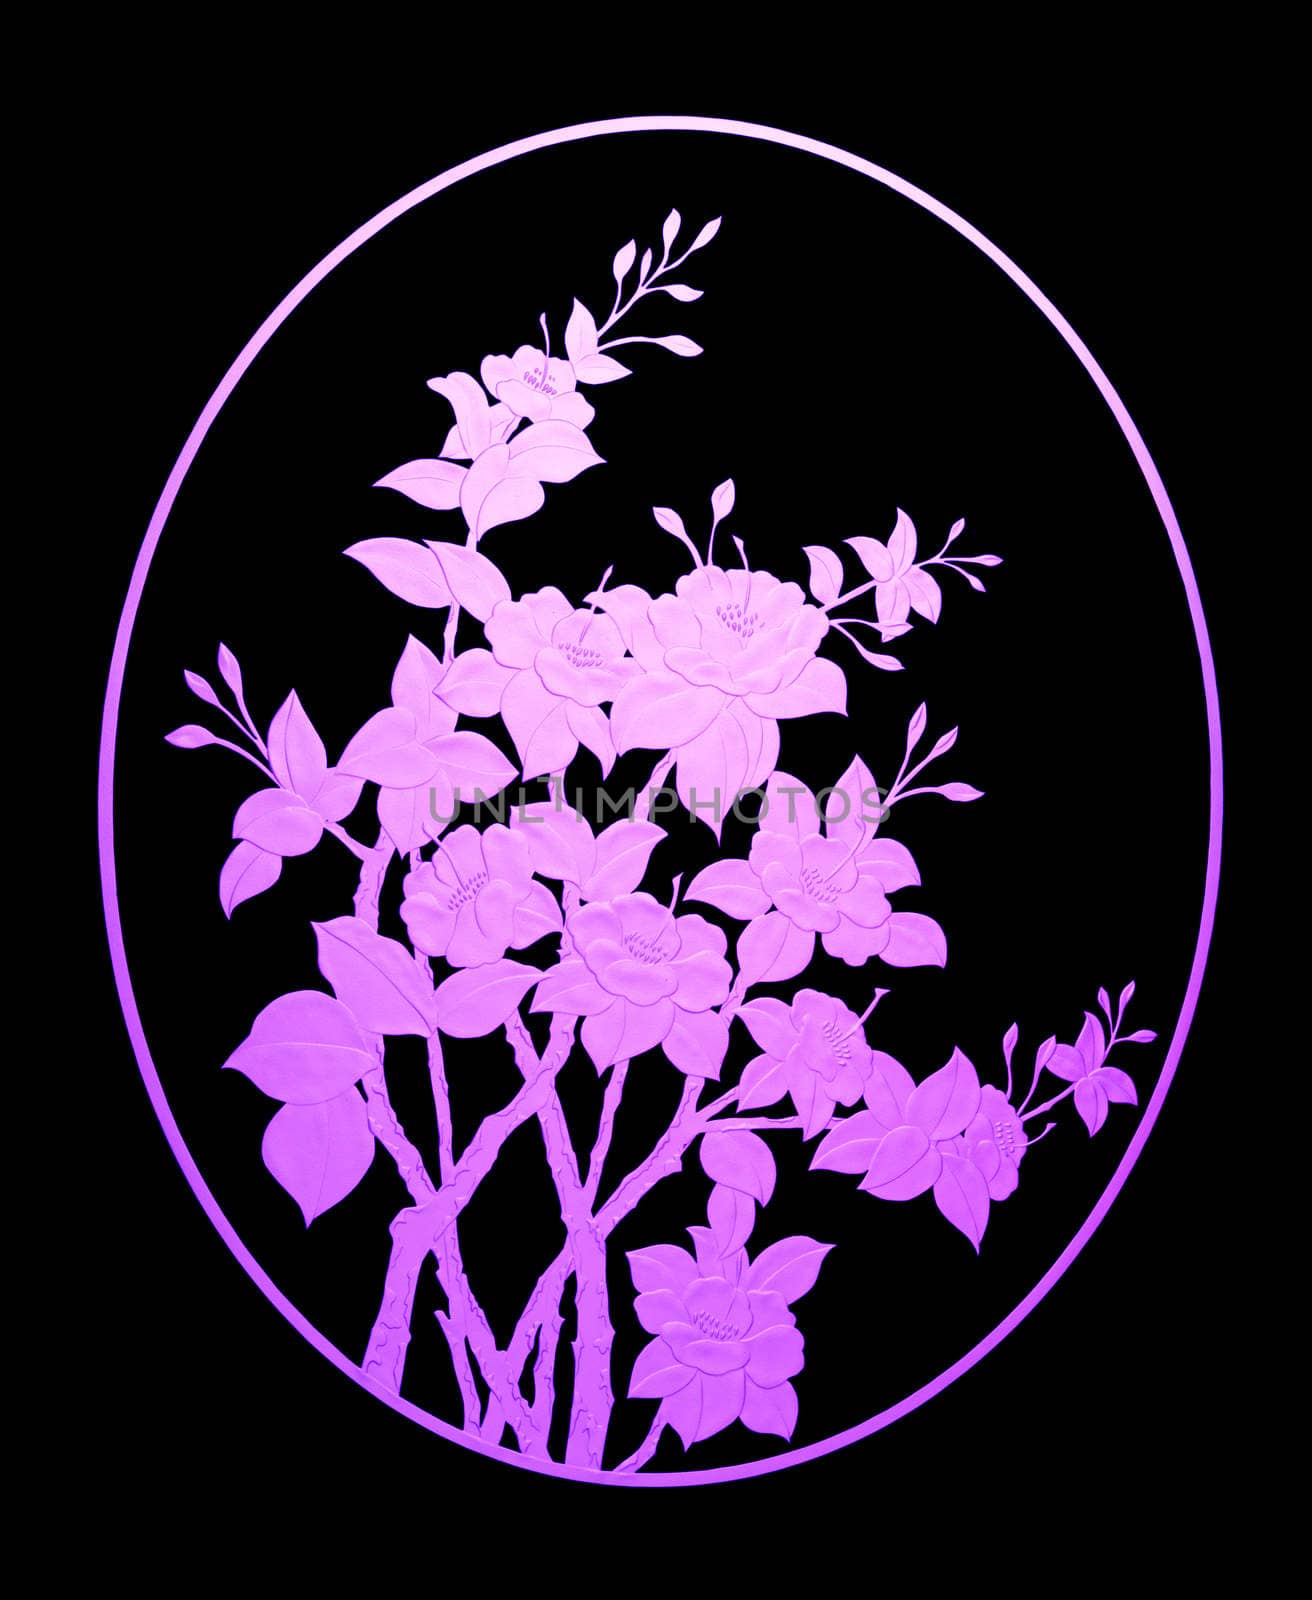 Pattern violet flower of glass on black background by Gamjai